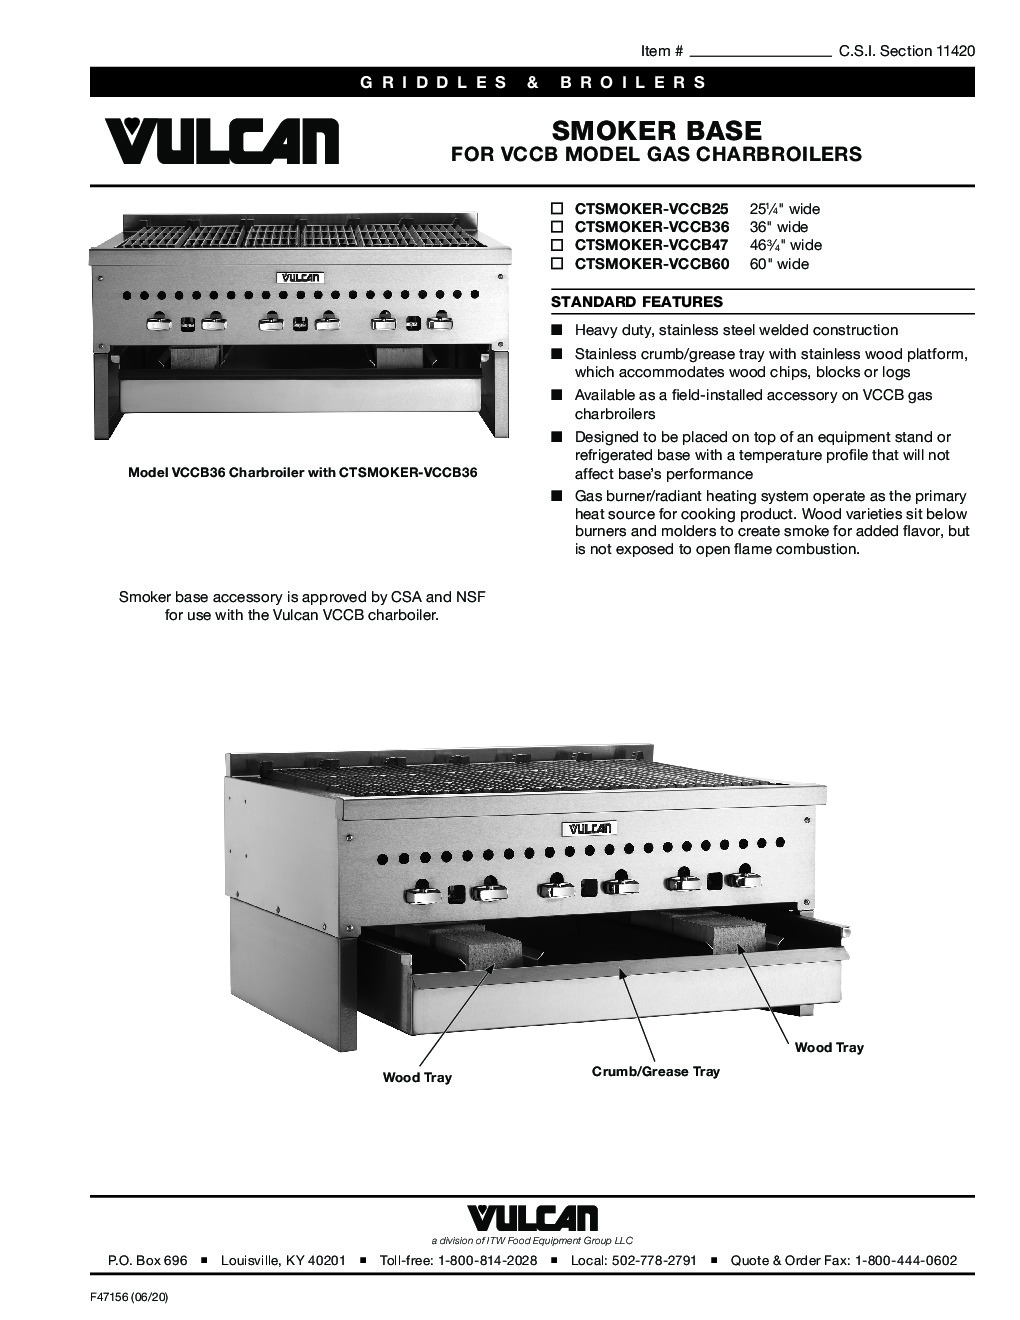 Vulcan CTSMOKER-VCCB47 Smoker Base Charbroiler